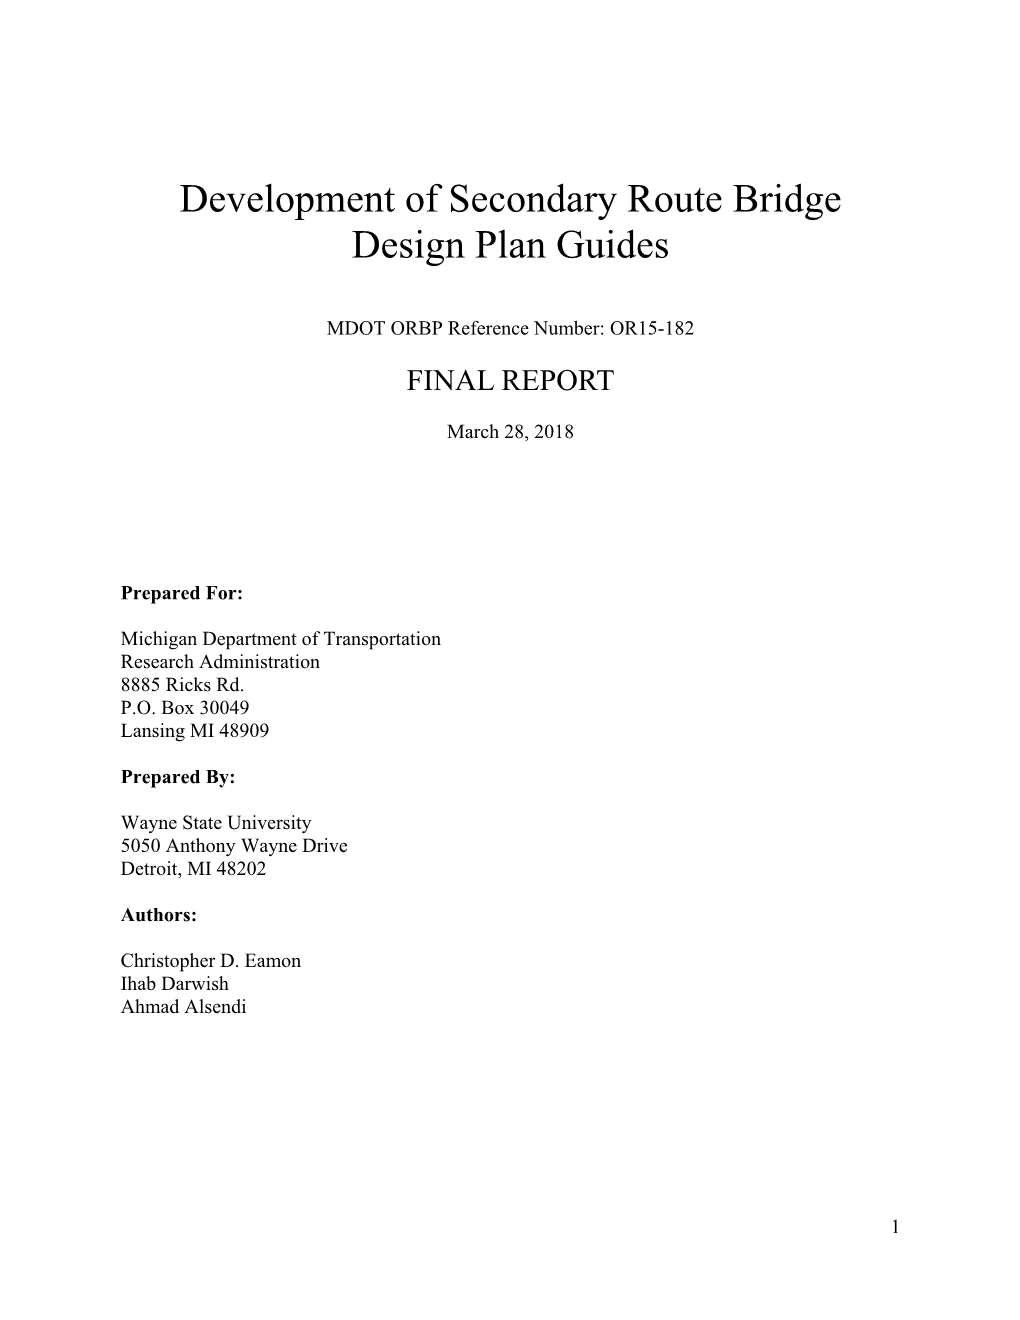 Development of Secondary Route Bridge Design Plan Guides